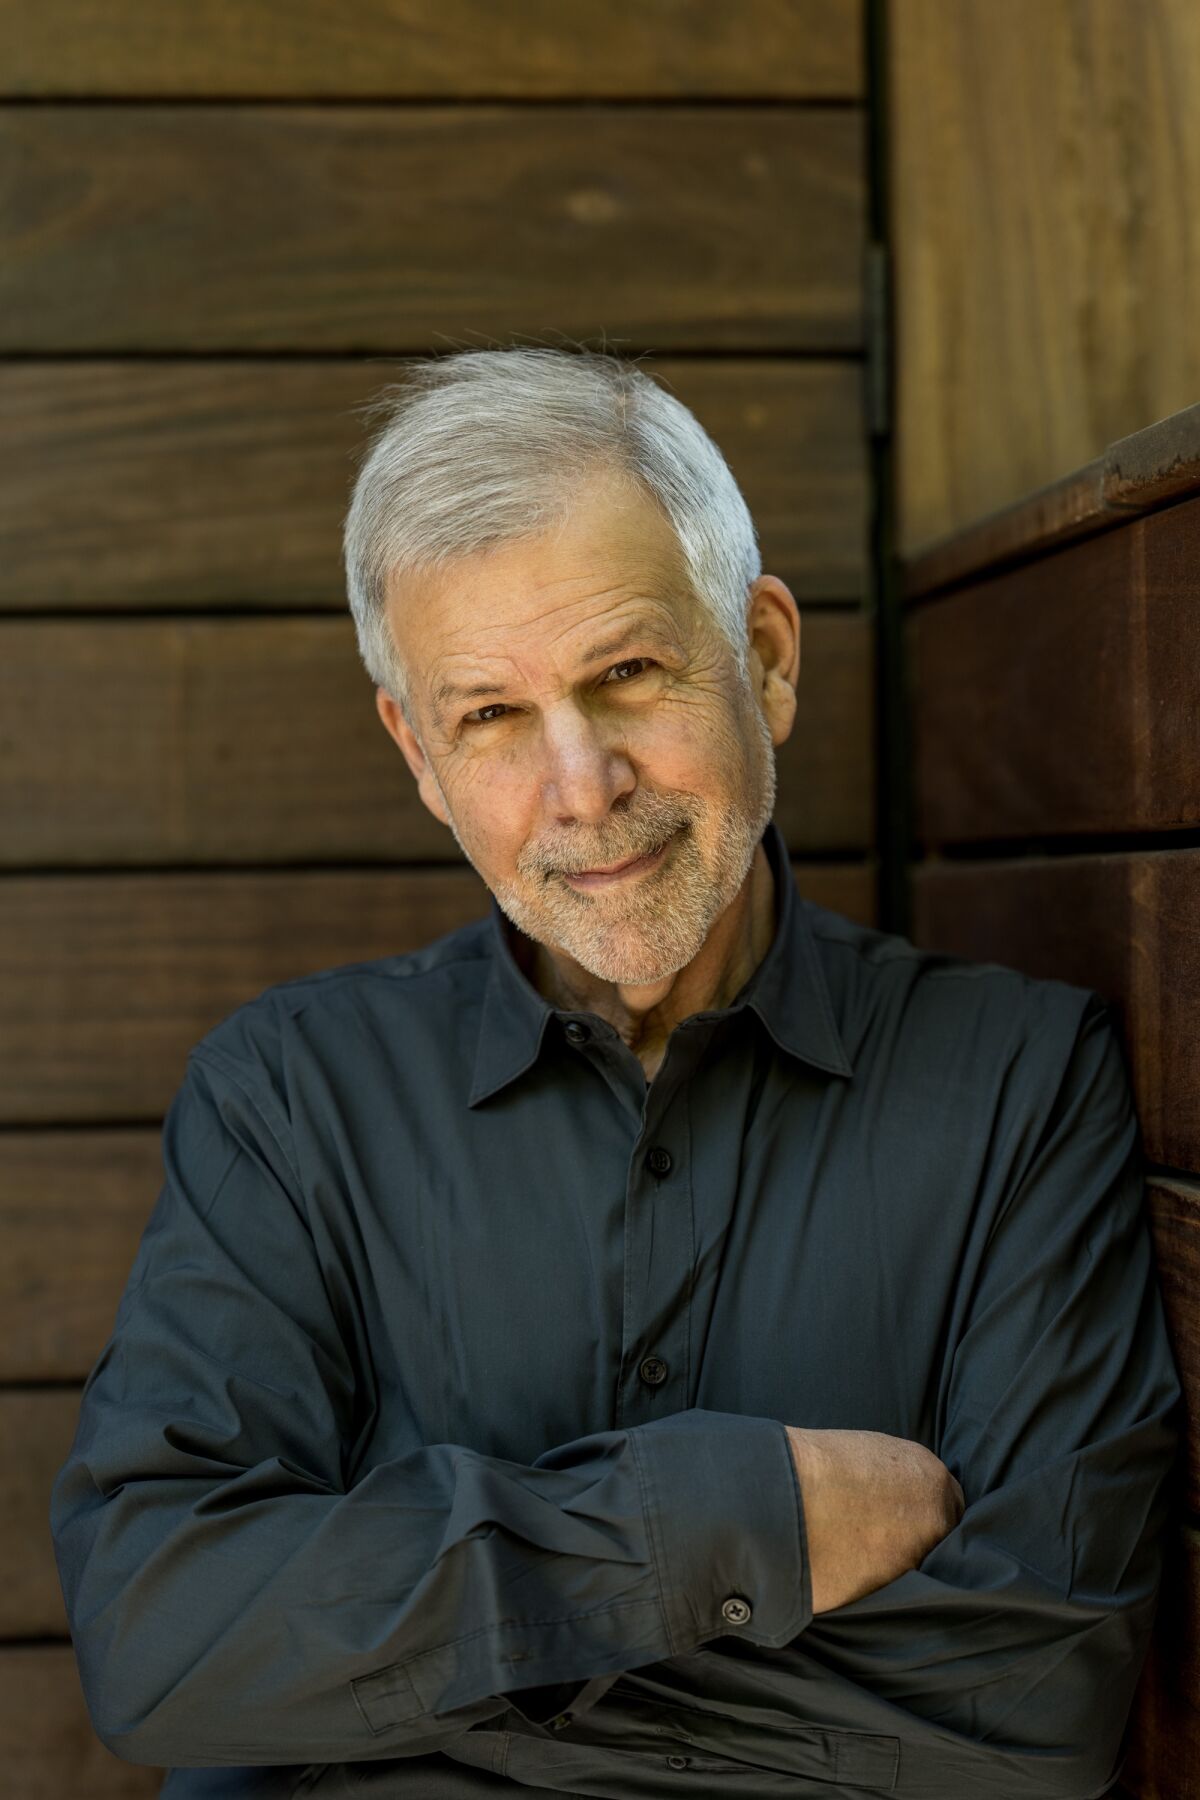 A headshot of a man in a dark gray button-down 